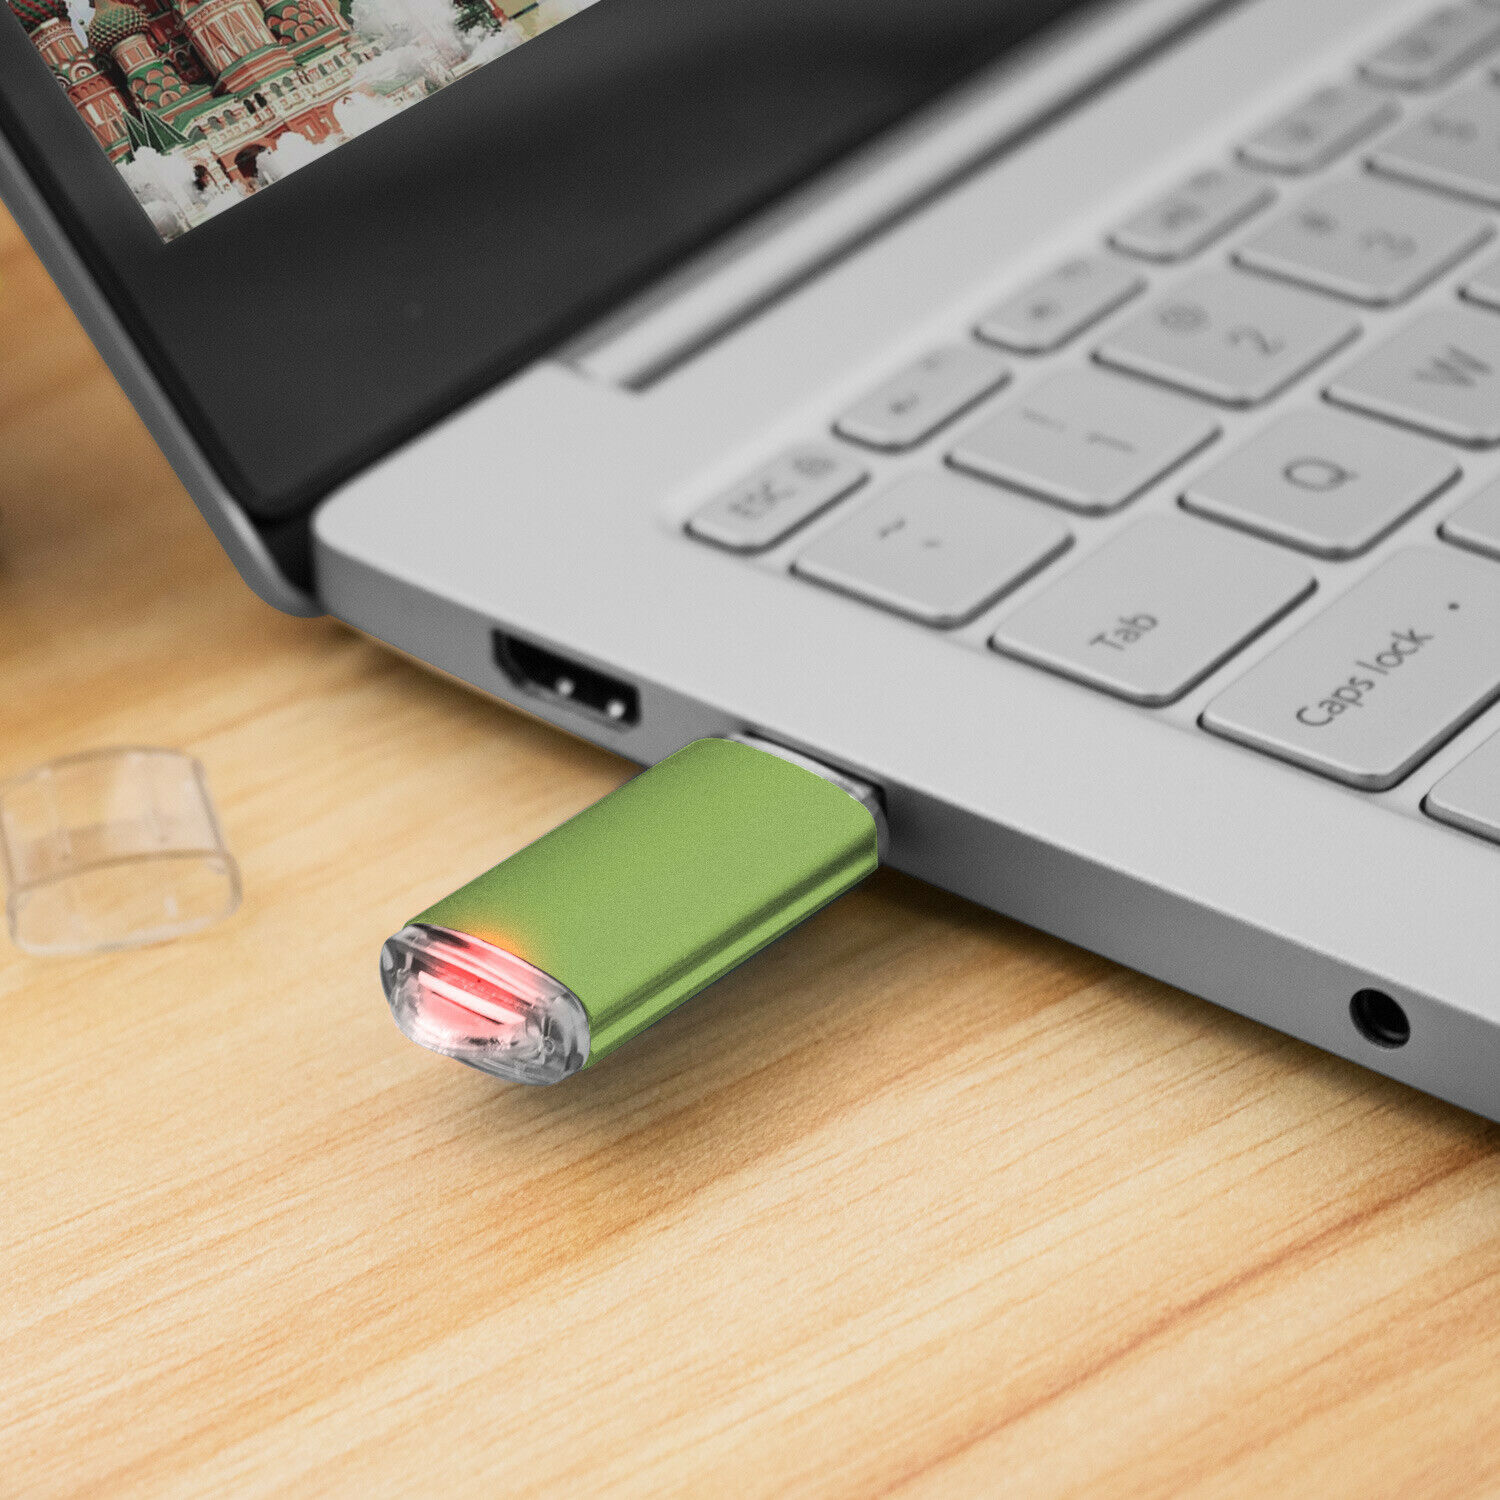 4 Pack 16GB USB 2.0 Flash Drive Memory Stick Thumb Drive Pen Drive Storage Kootion Does not apply - фотография #9